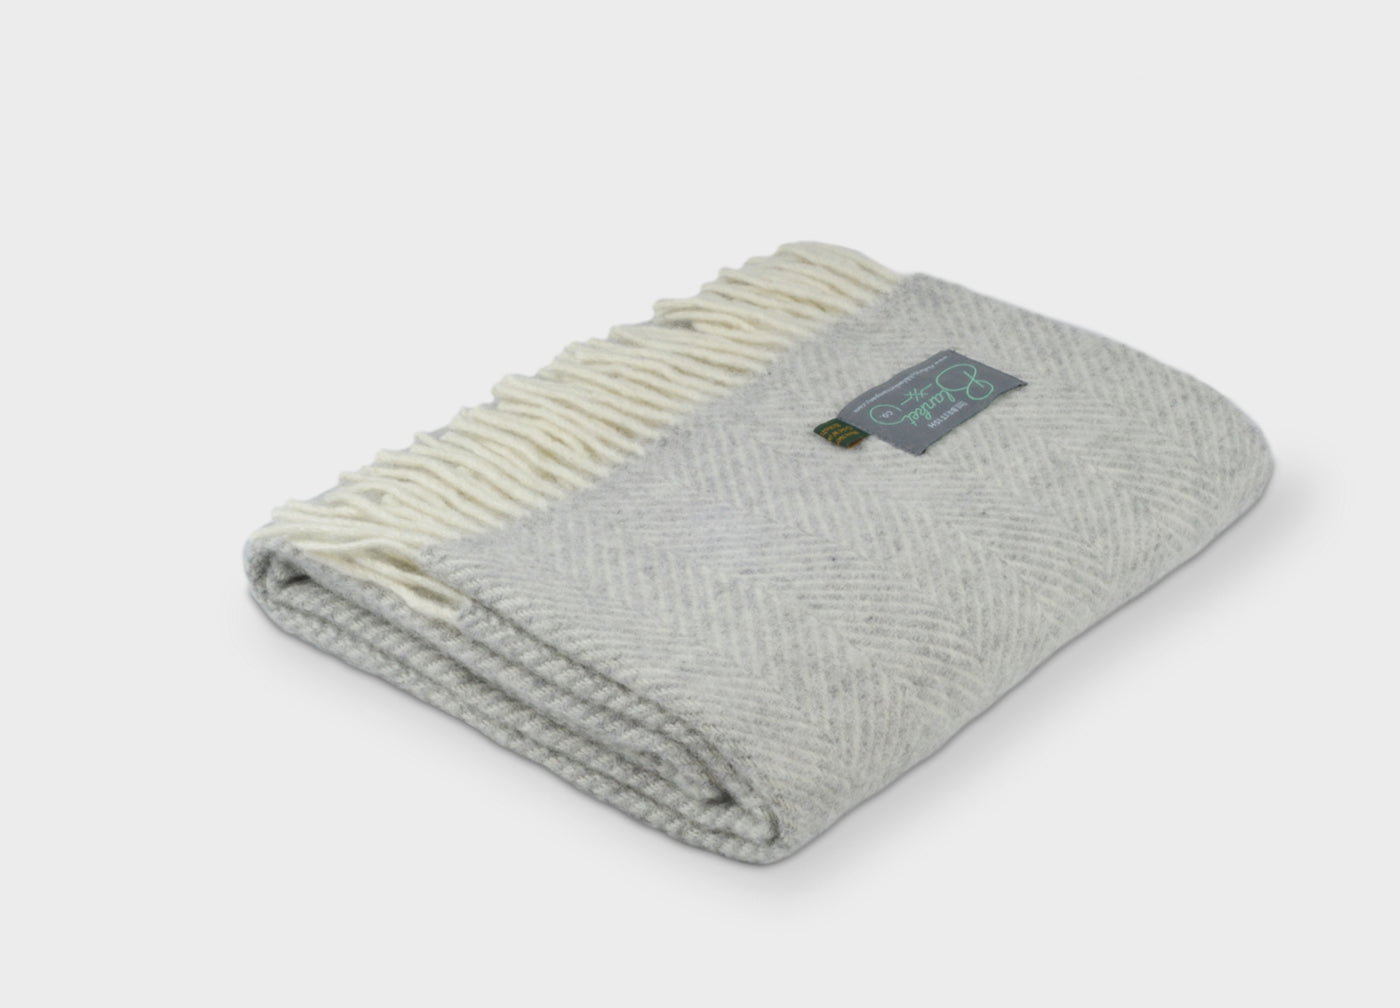 Folded grey herringbone wool throw by The British Blanket Company